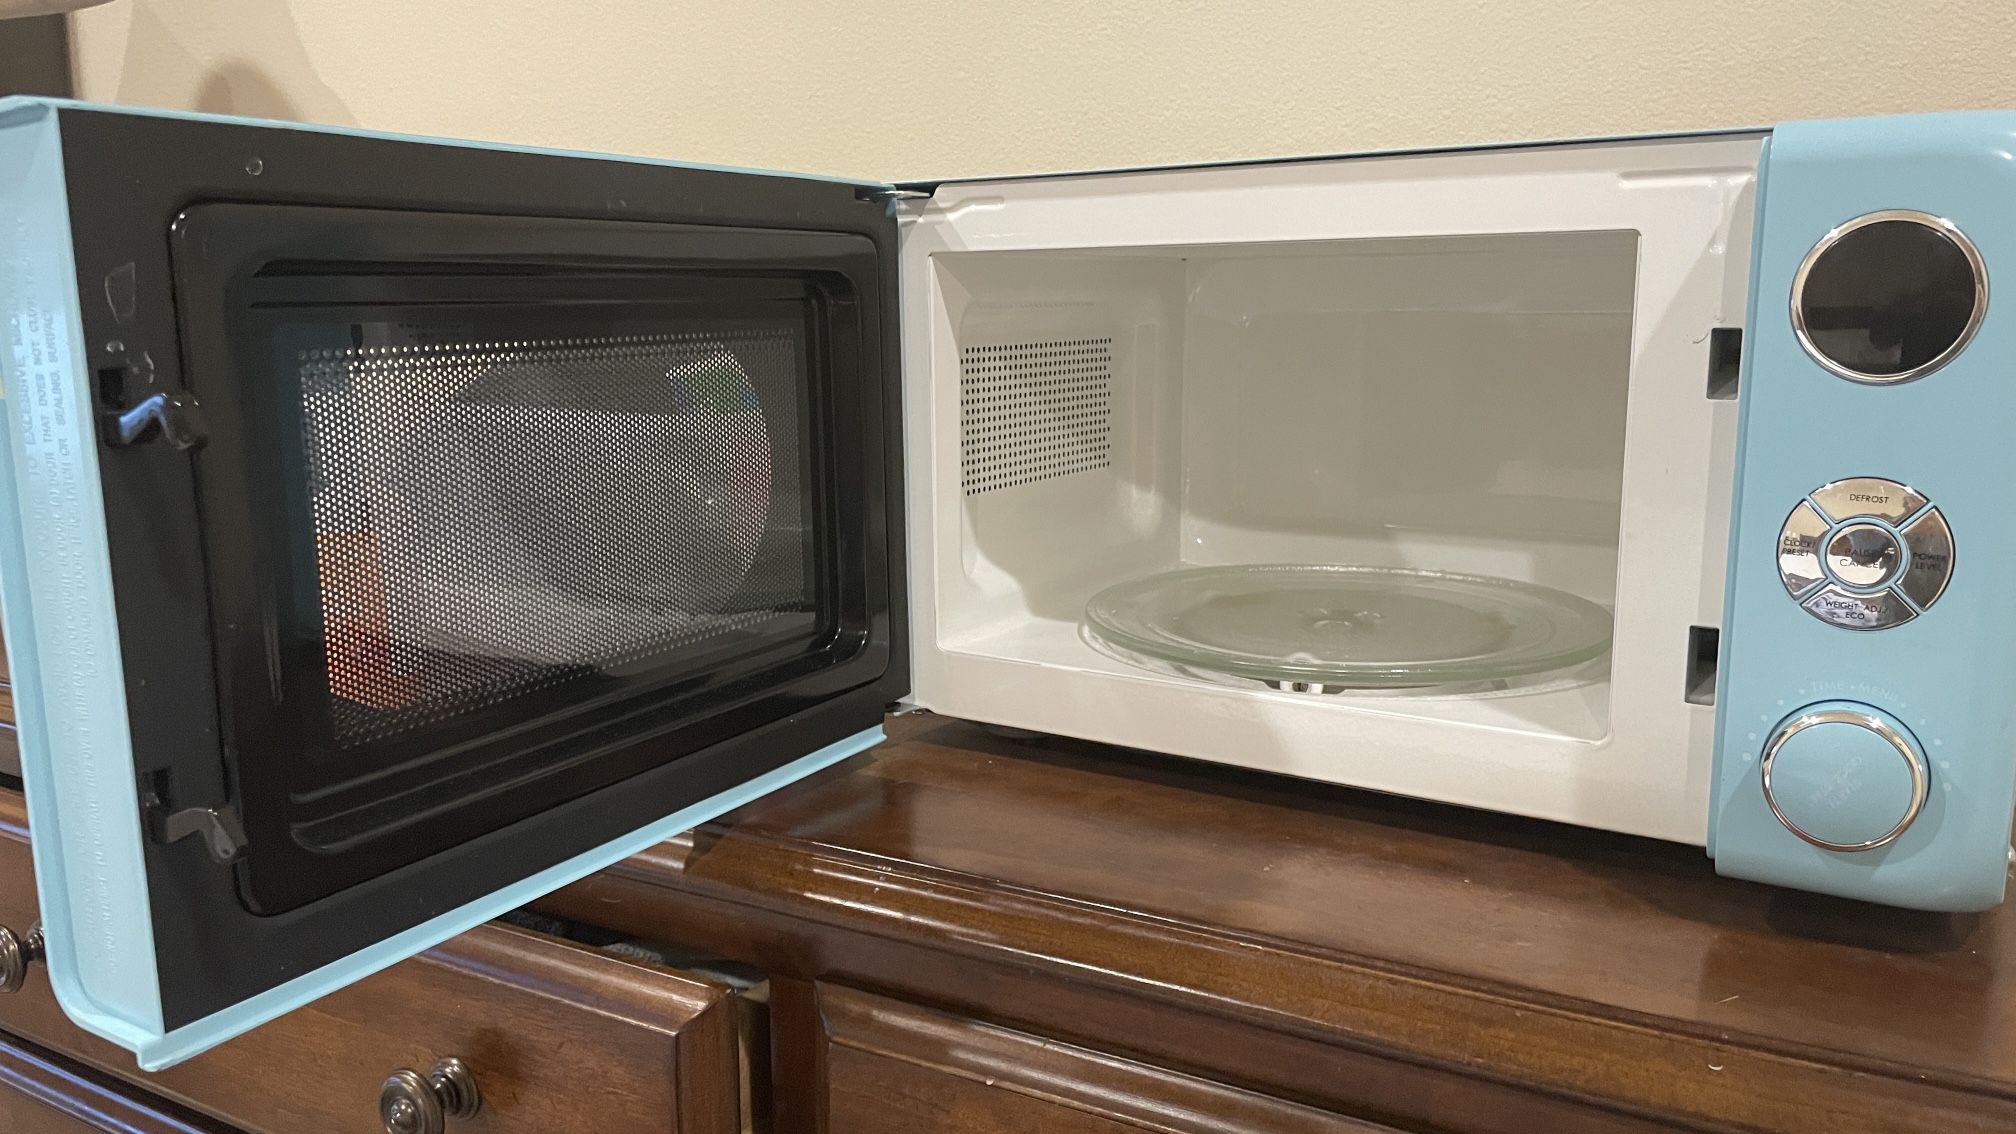 GLCMKA07BER07 by Galanz - Galanz 0.7 Cu Ft Retro Microwave Oven in Bebop  Blue